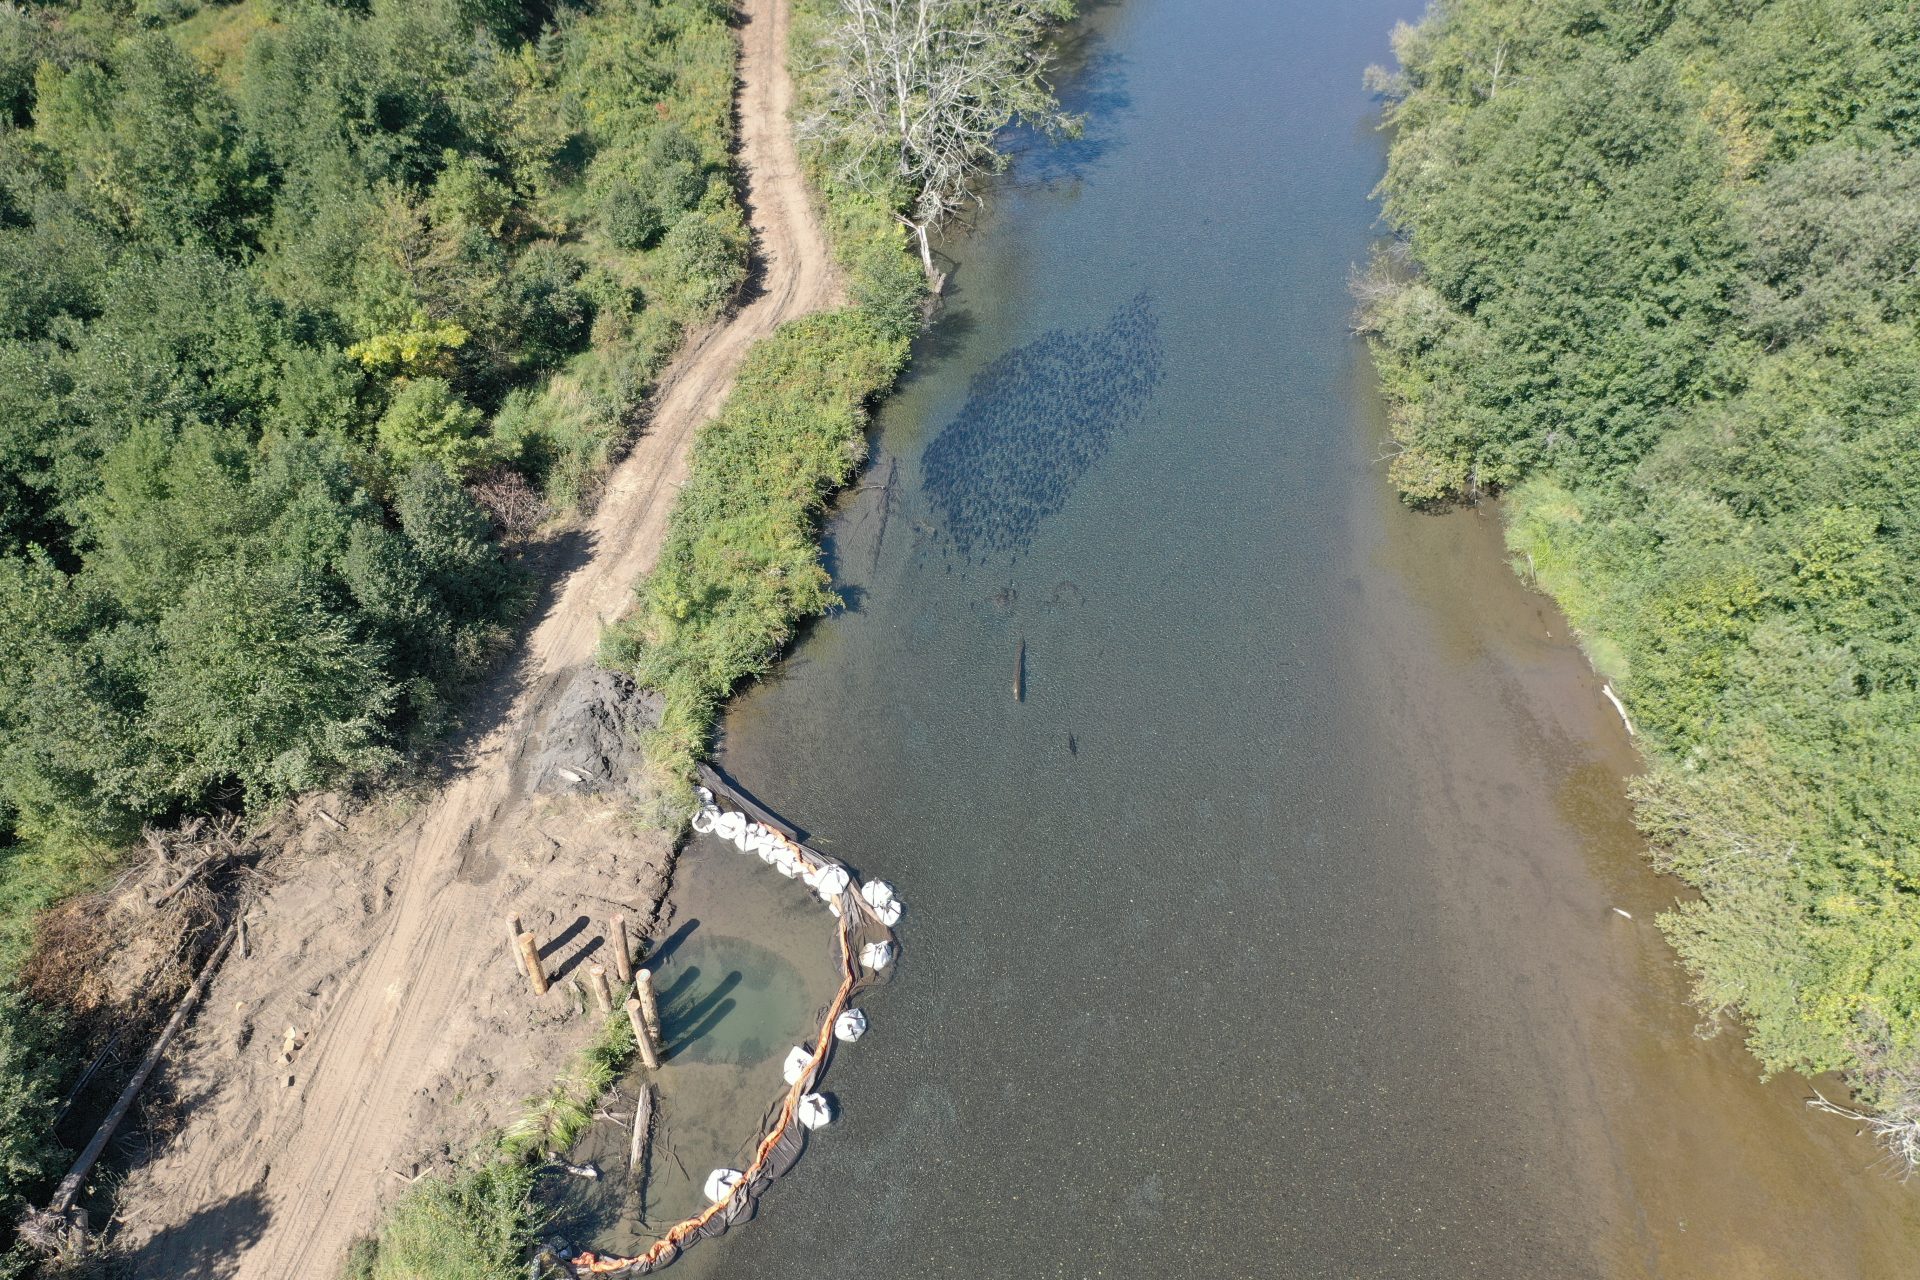 New salmon habitat for the lower Skokomish River